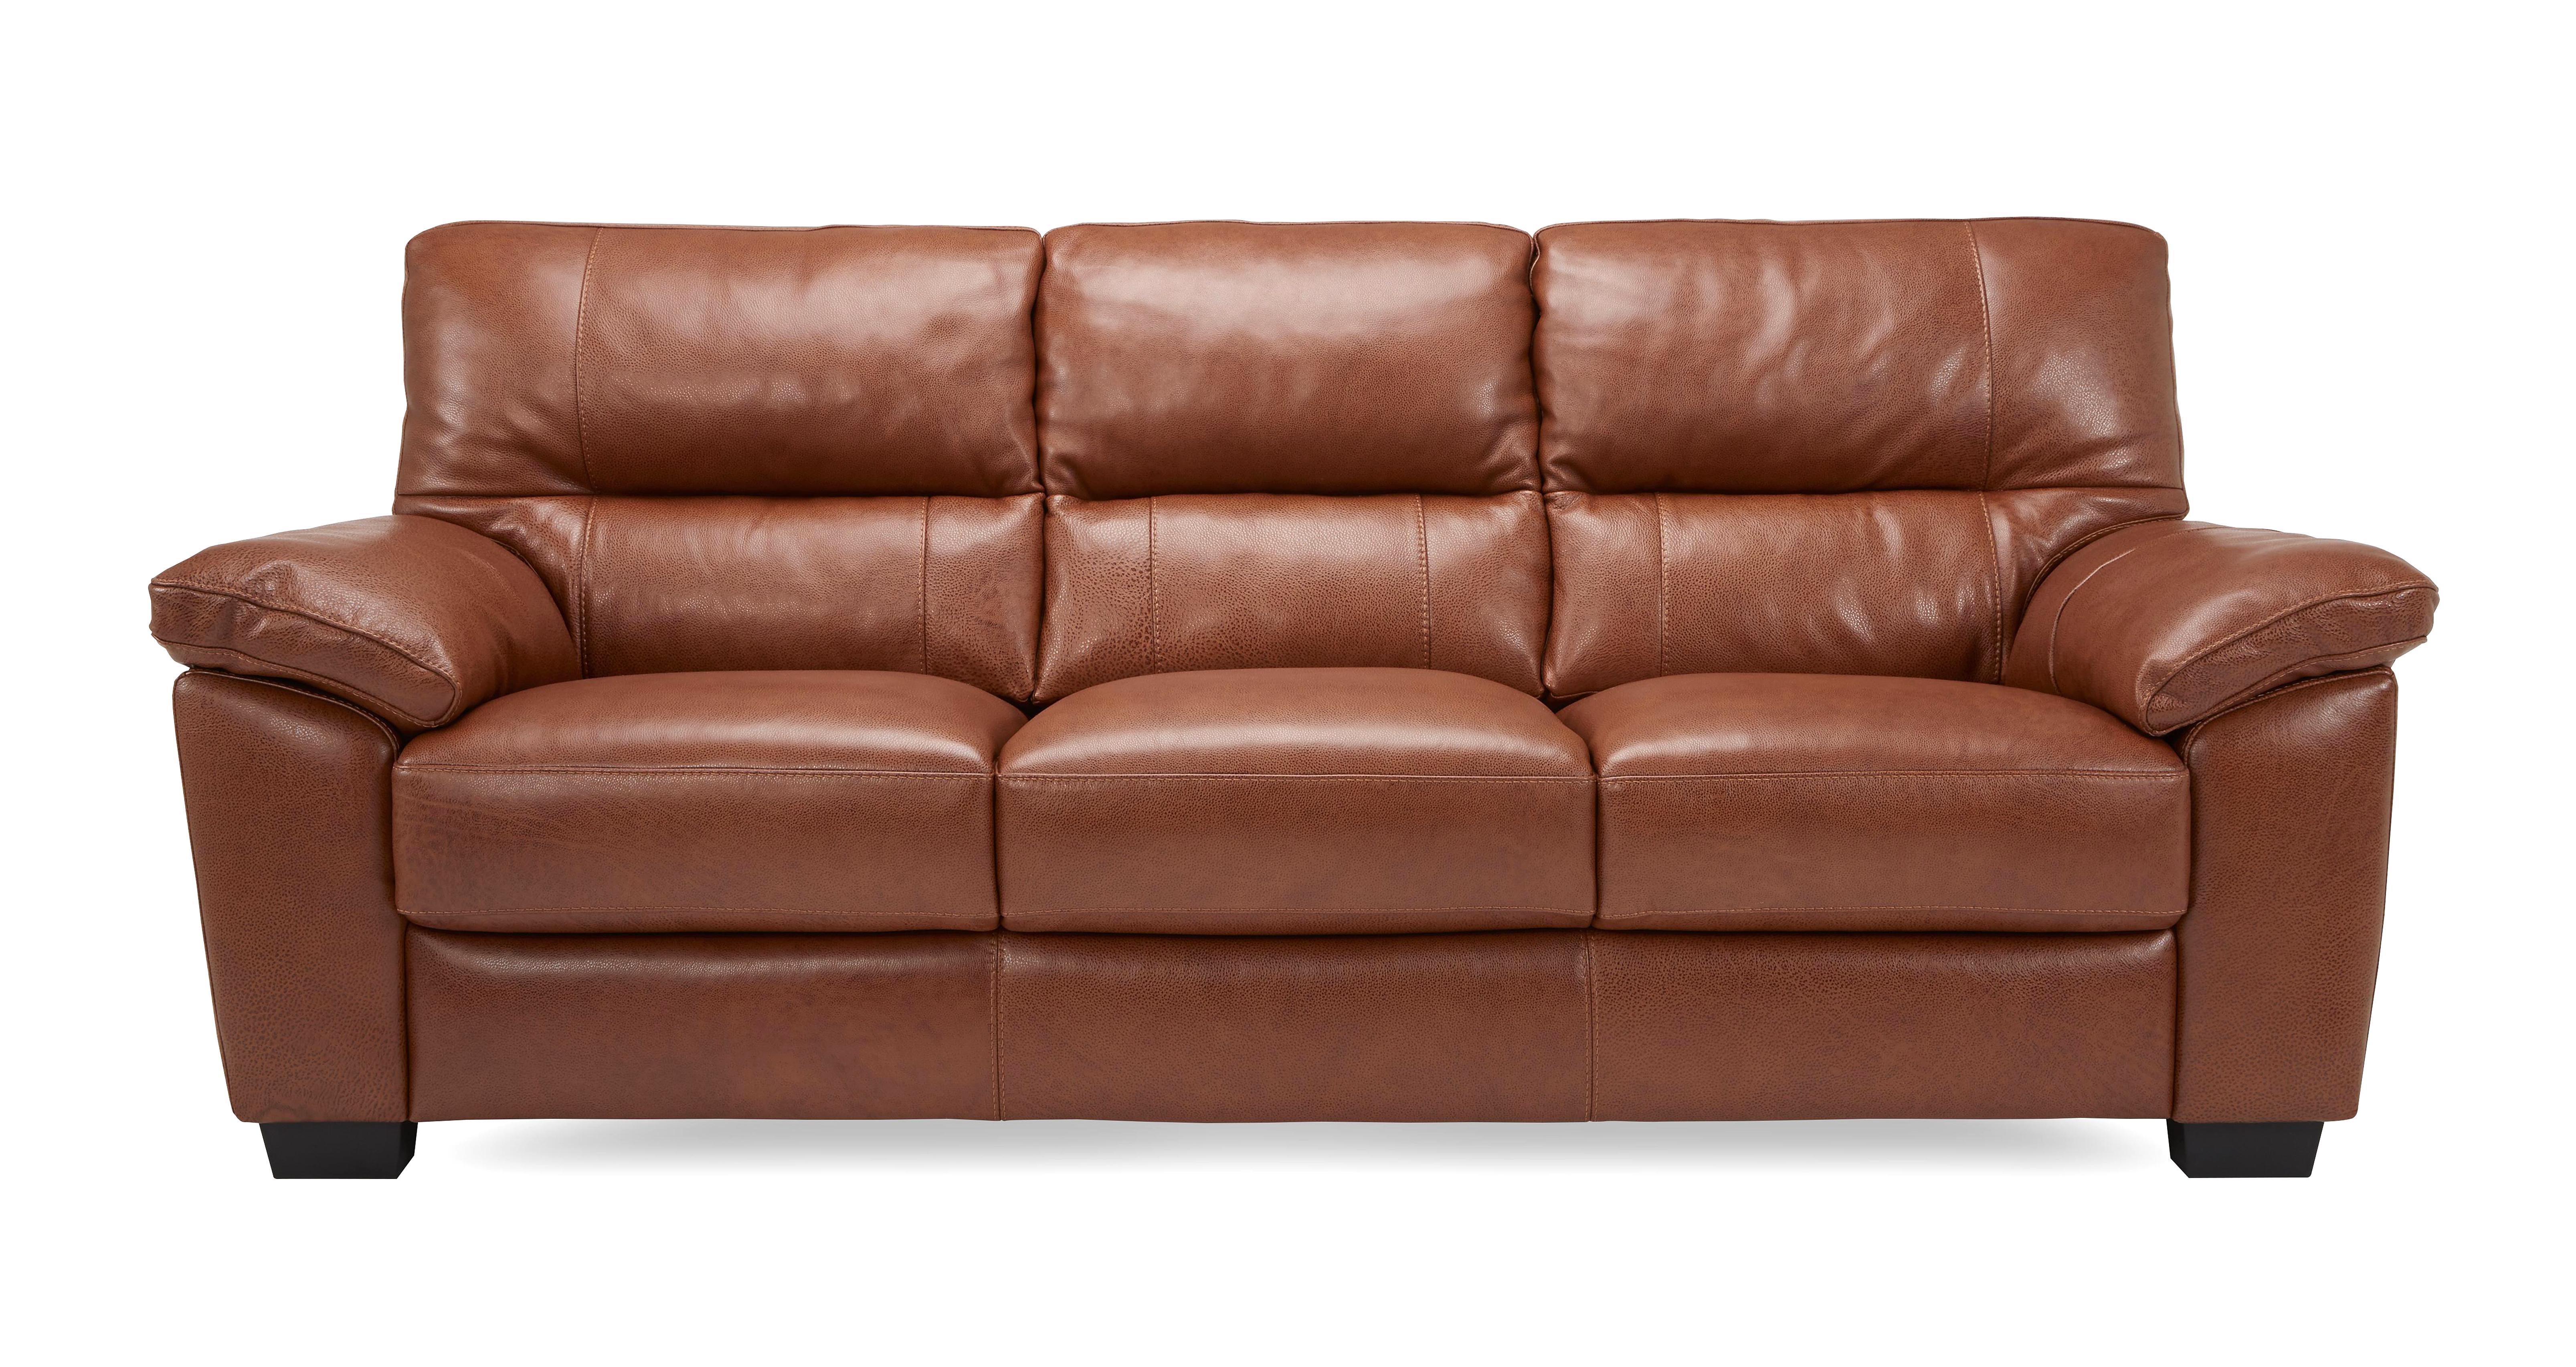 quality leather sofa sale uk